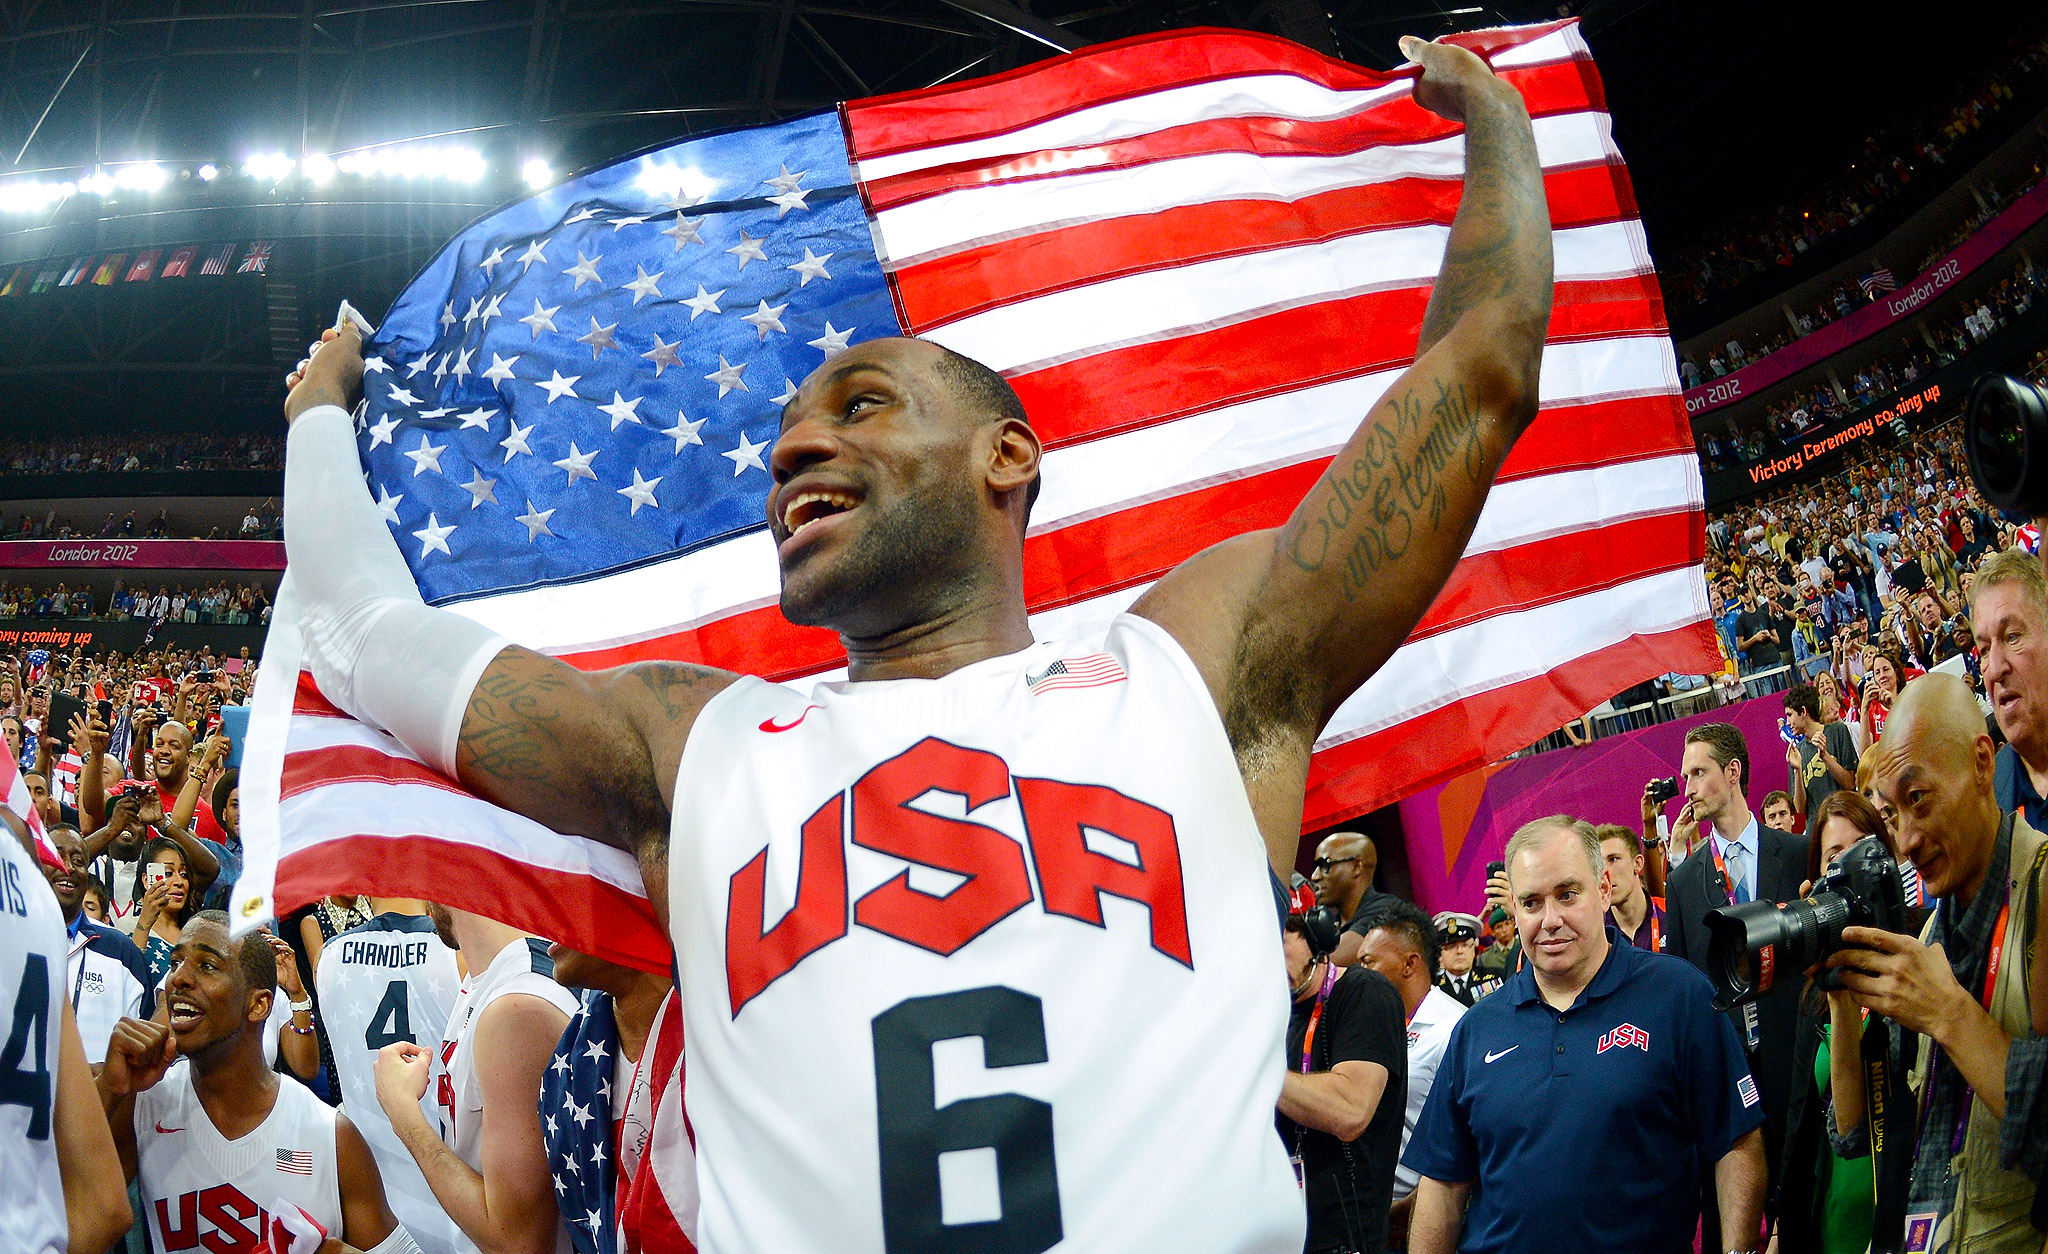 Athlete holding American flag